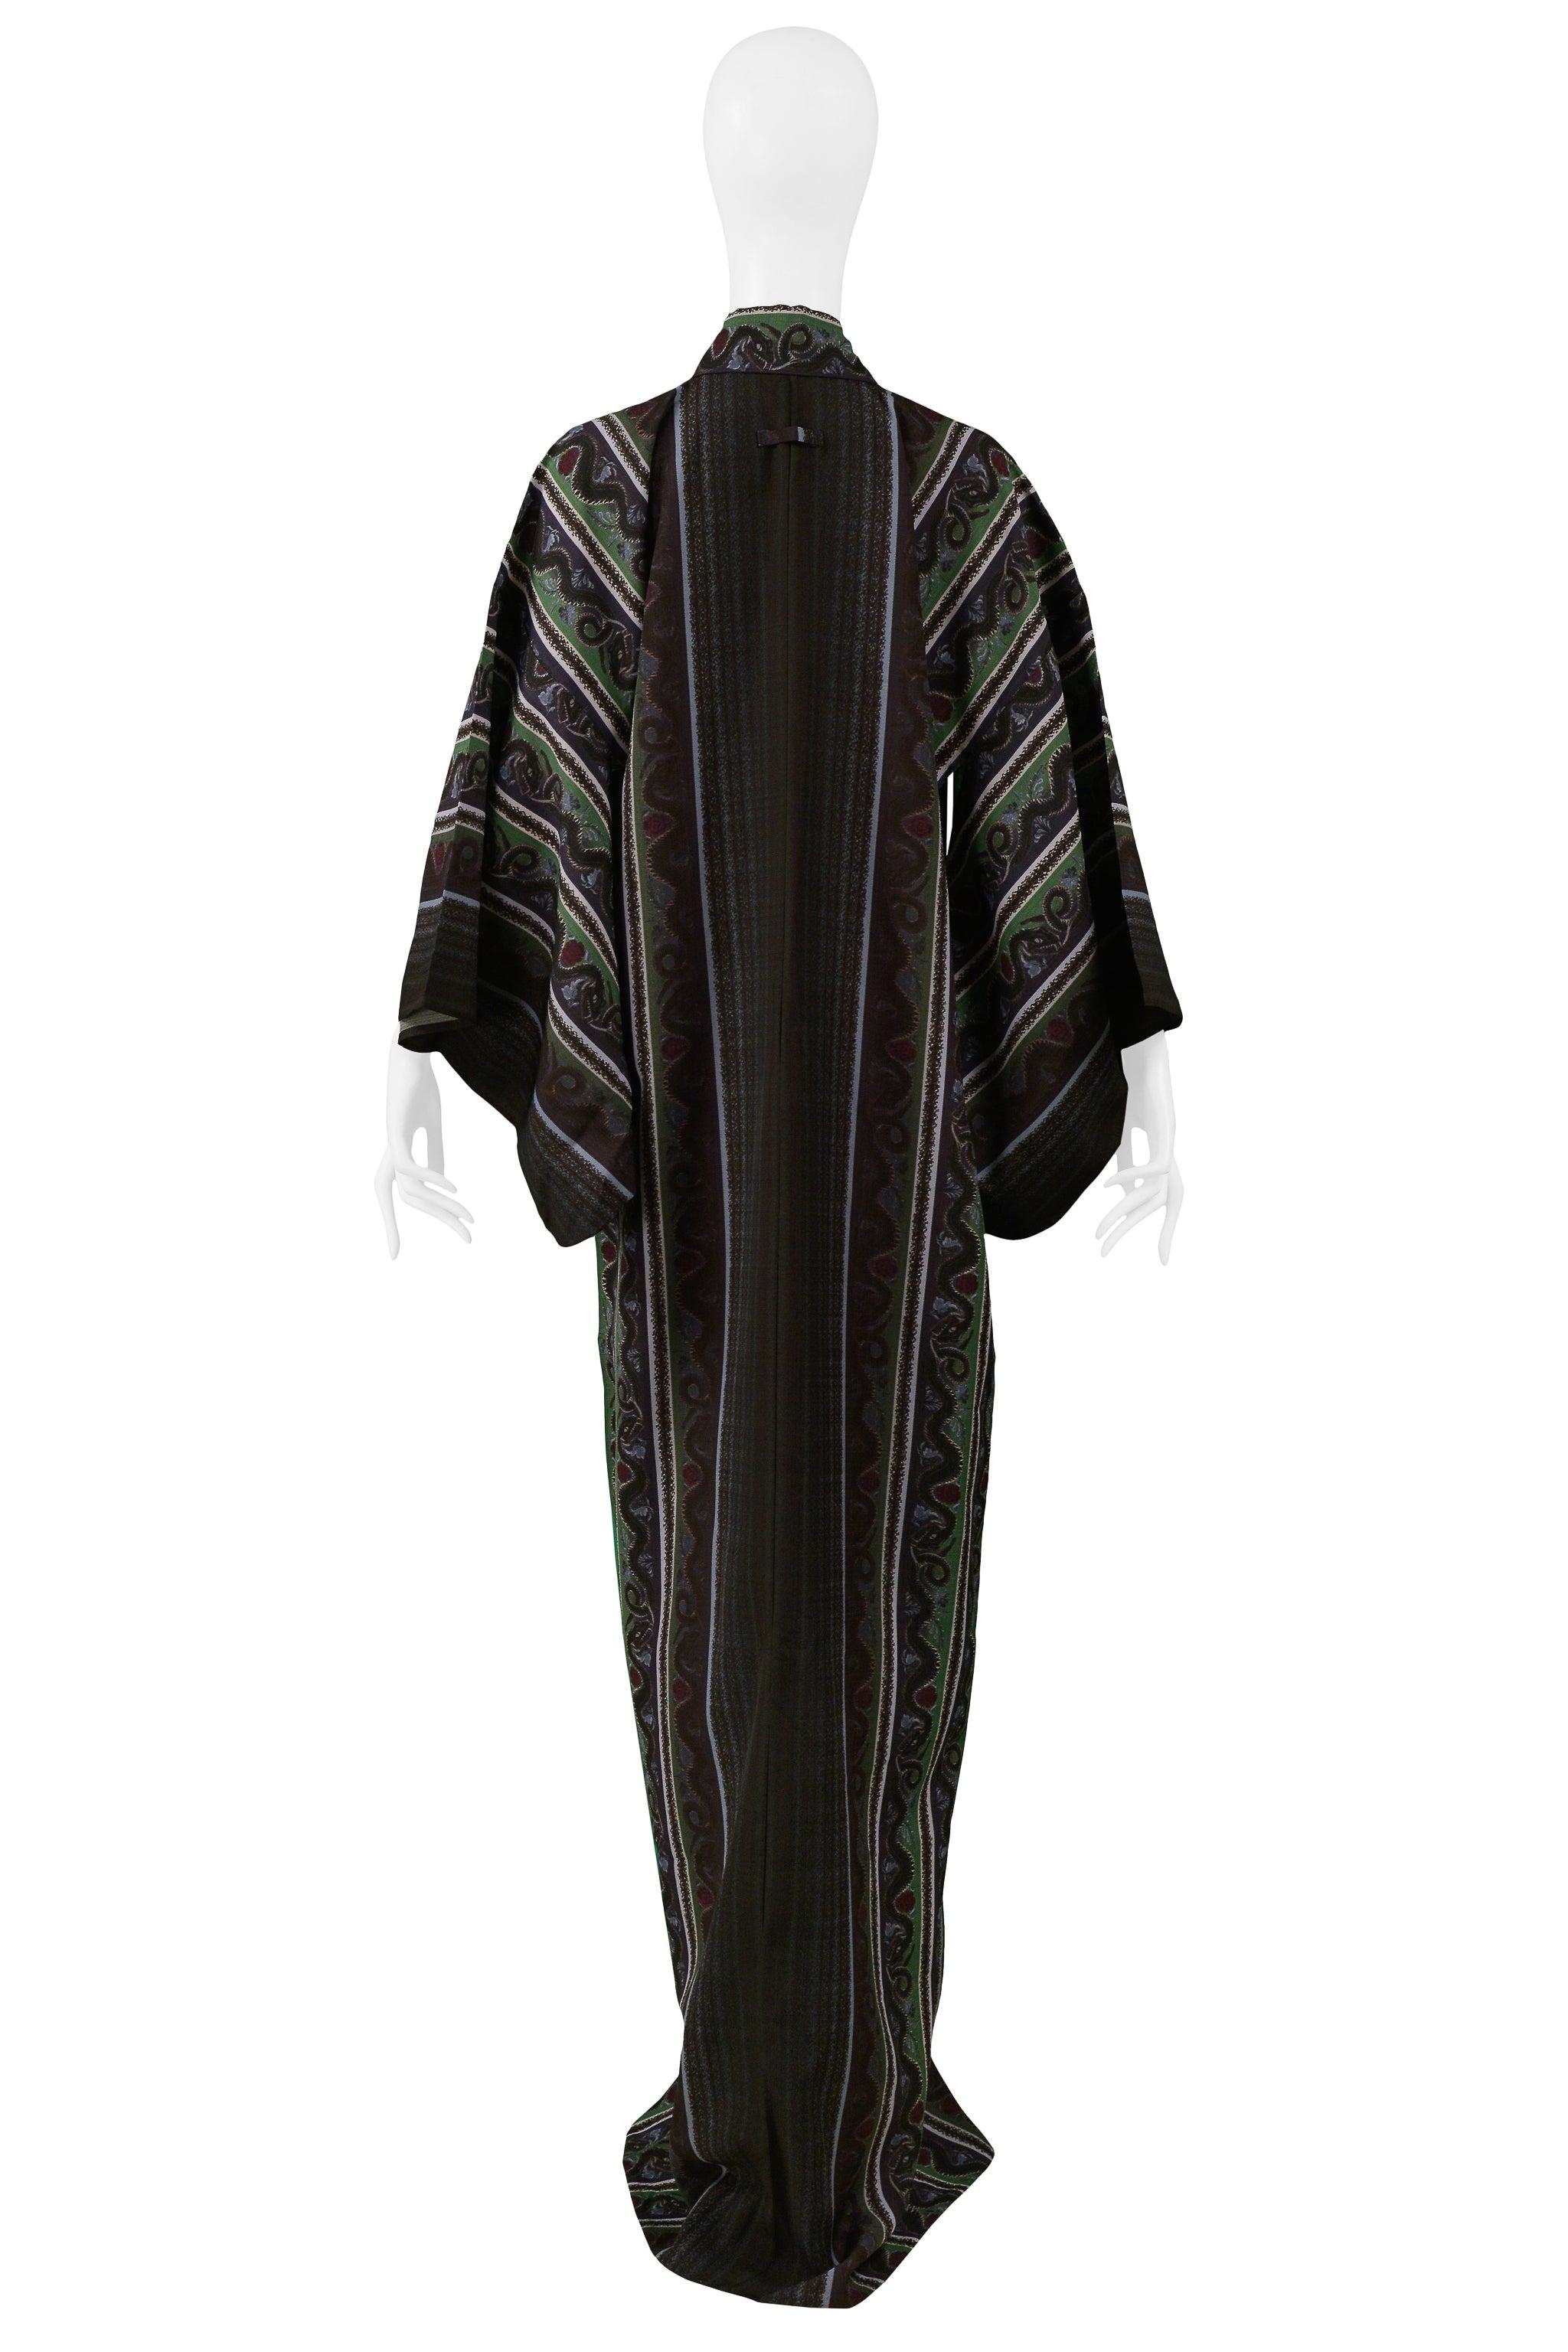 Jean Paul Gaultier Forest & Serpent Kimono Robe 2002 1